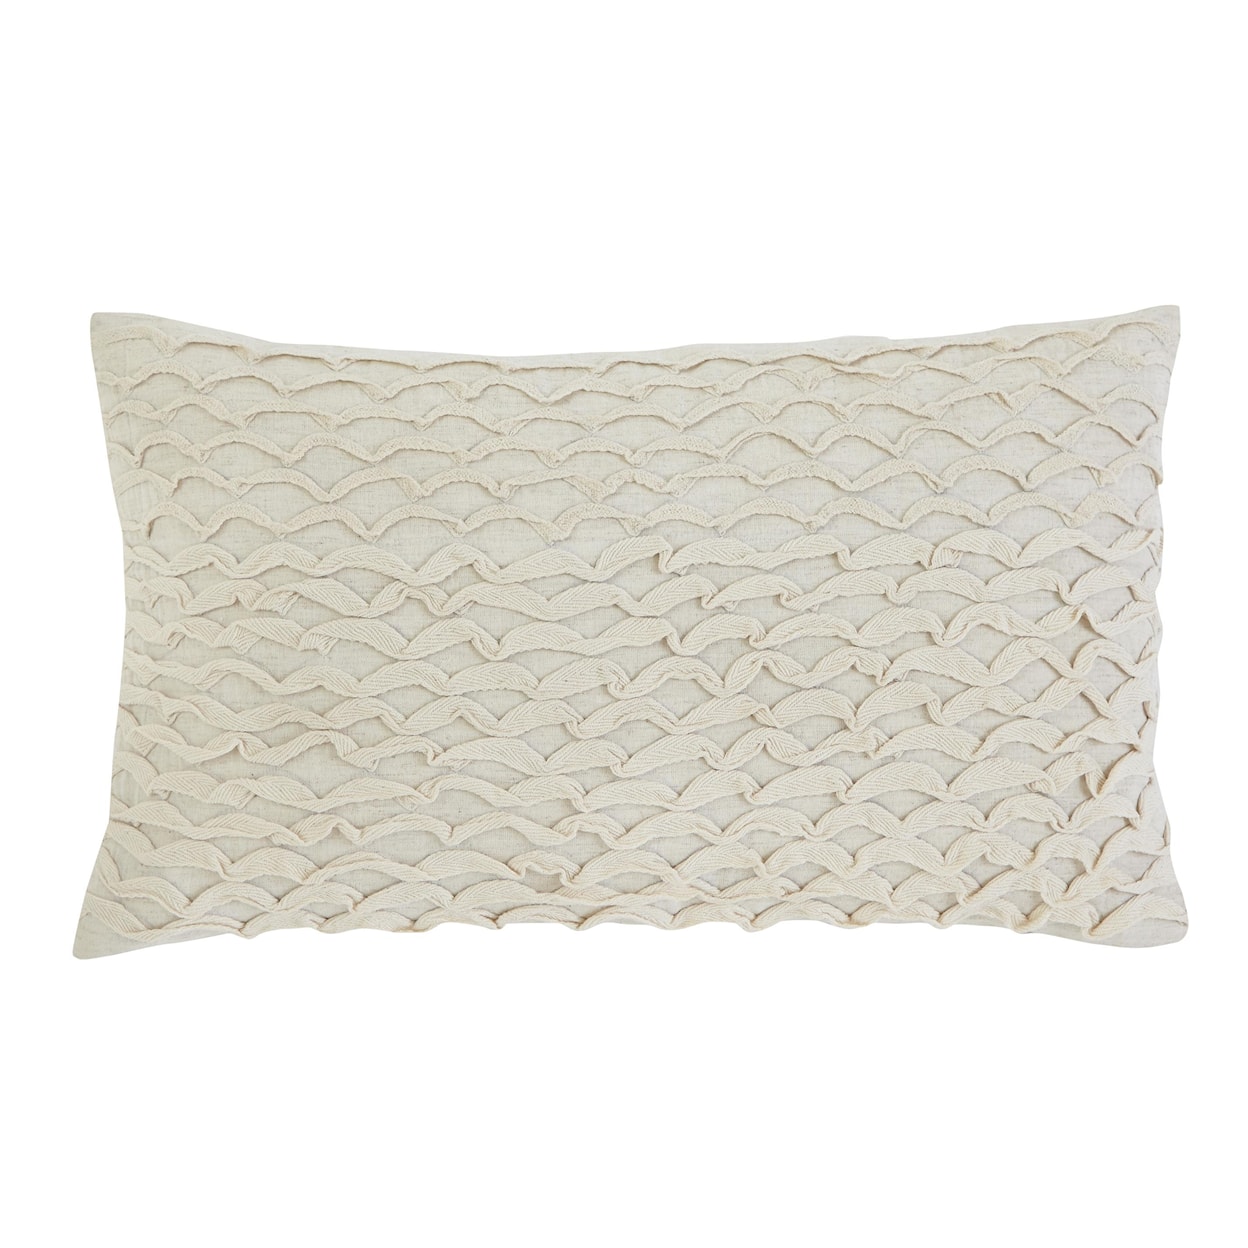 Ashley Furniture Signature Design Pillows Stitched - Beige Lumbar Pillow